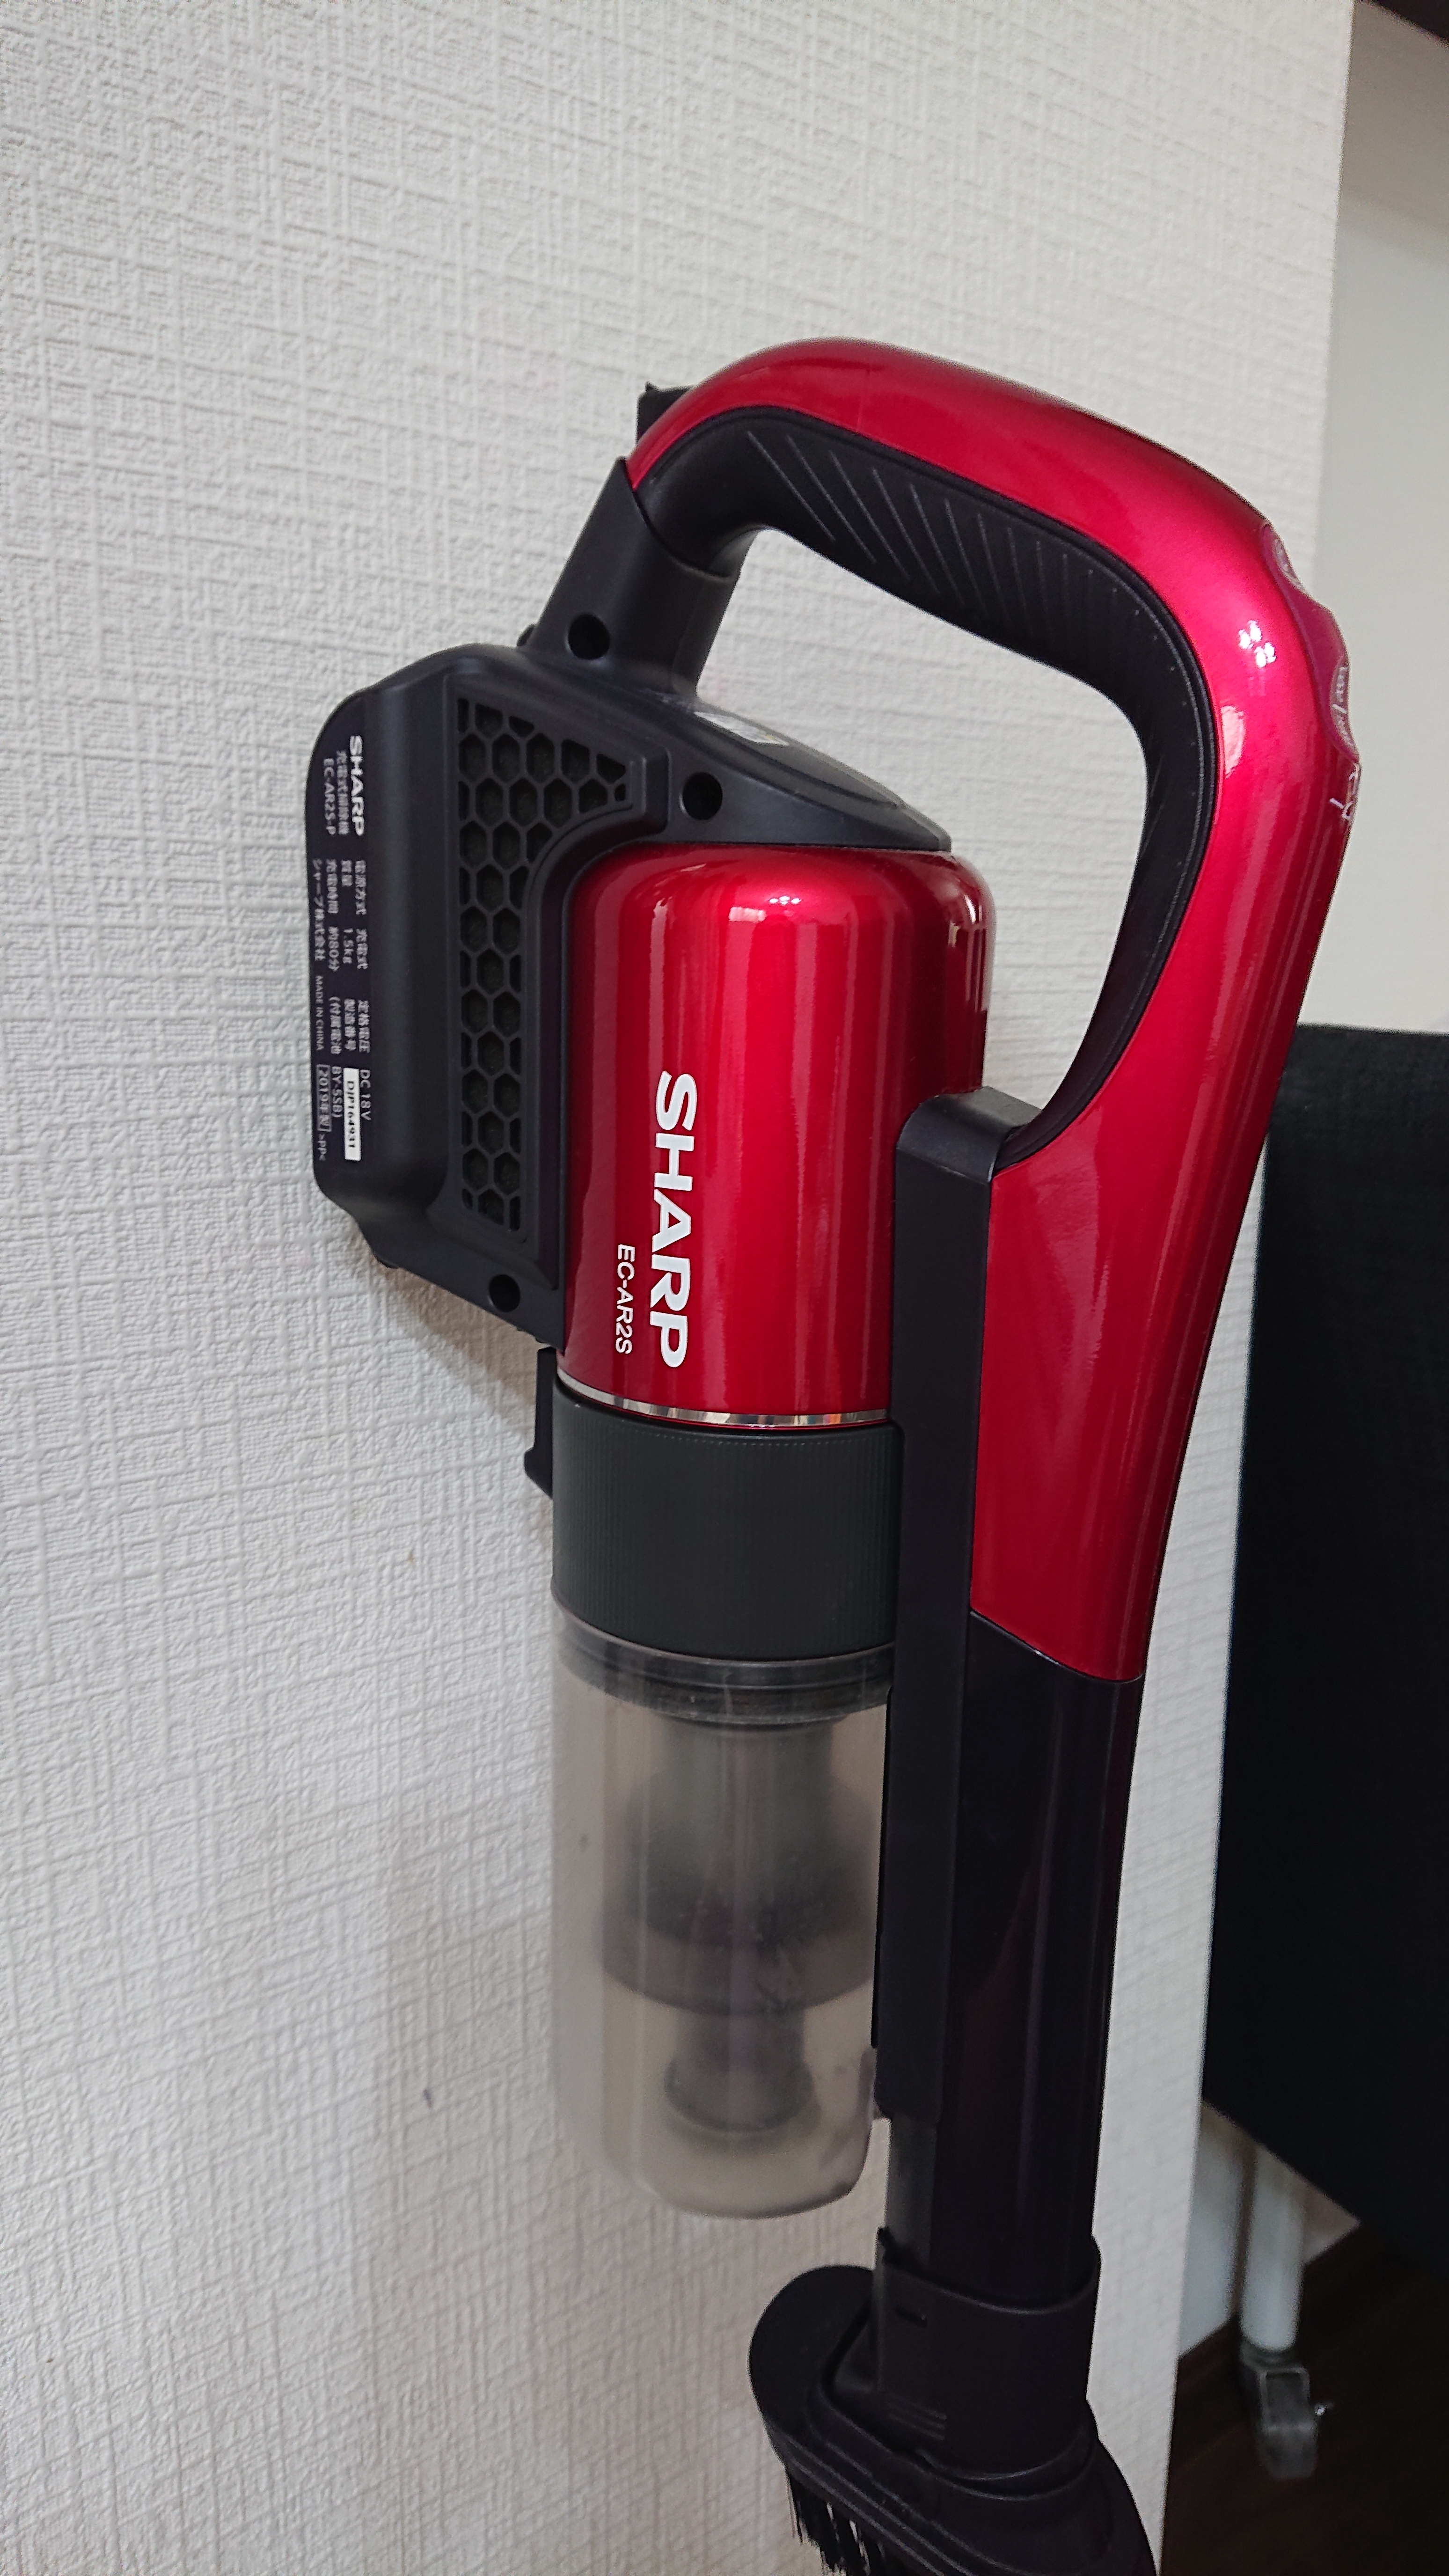 SHARP(シャープ) / コードレススティック掃除機 EC-AR2Sの口コミ・評判 